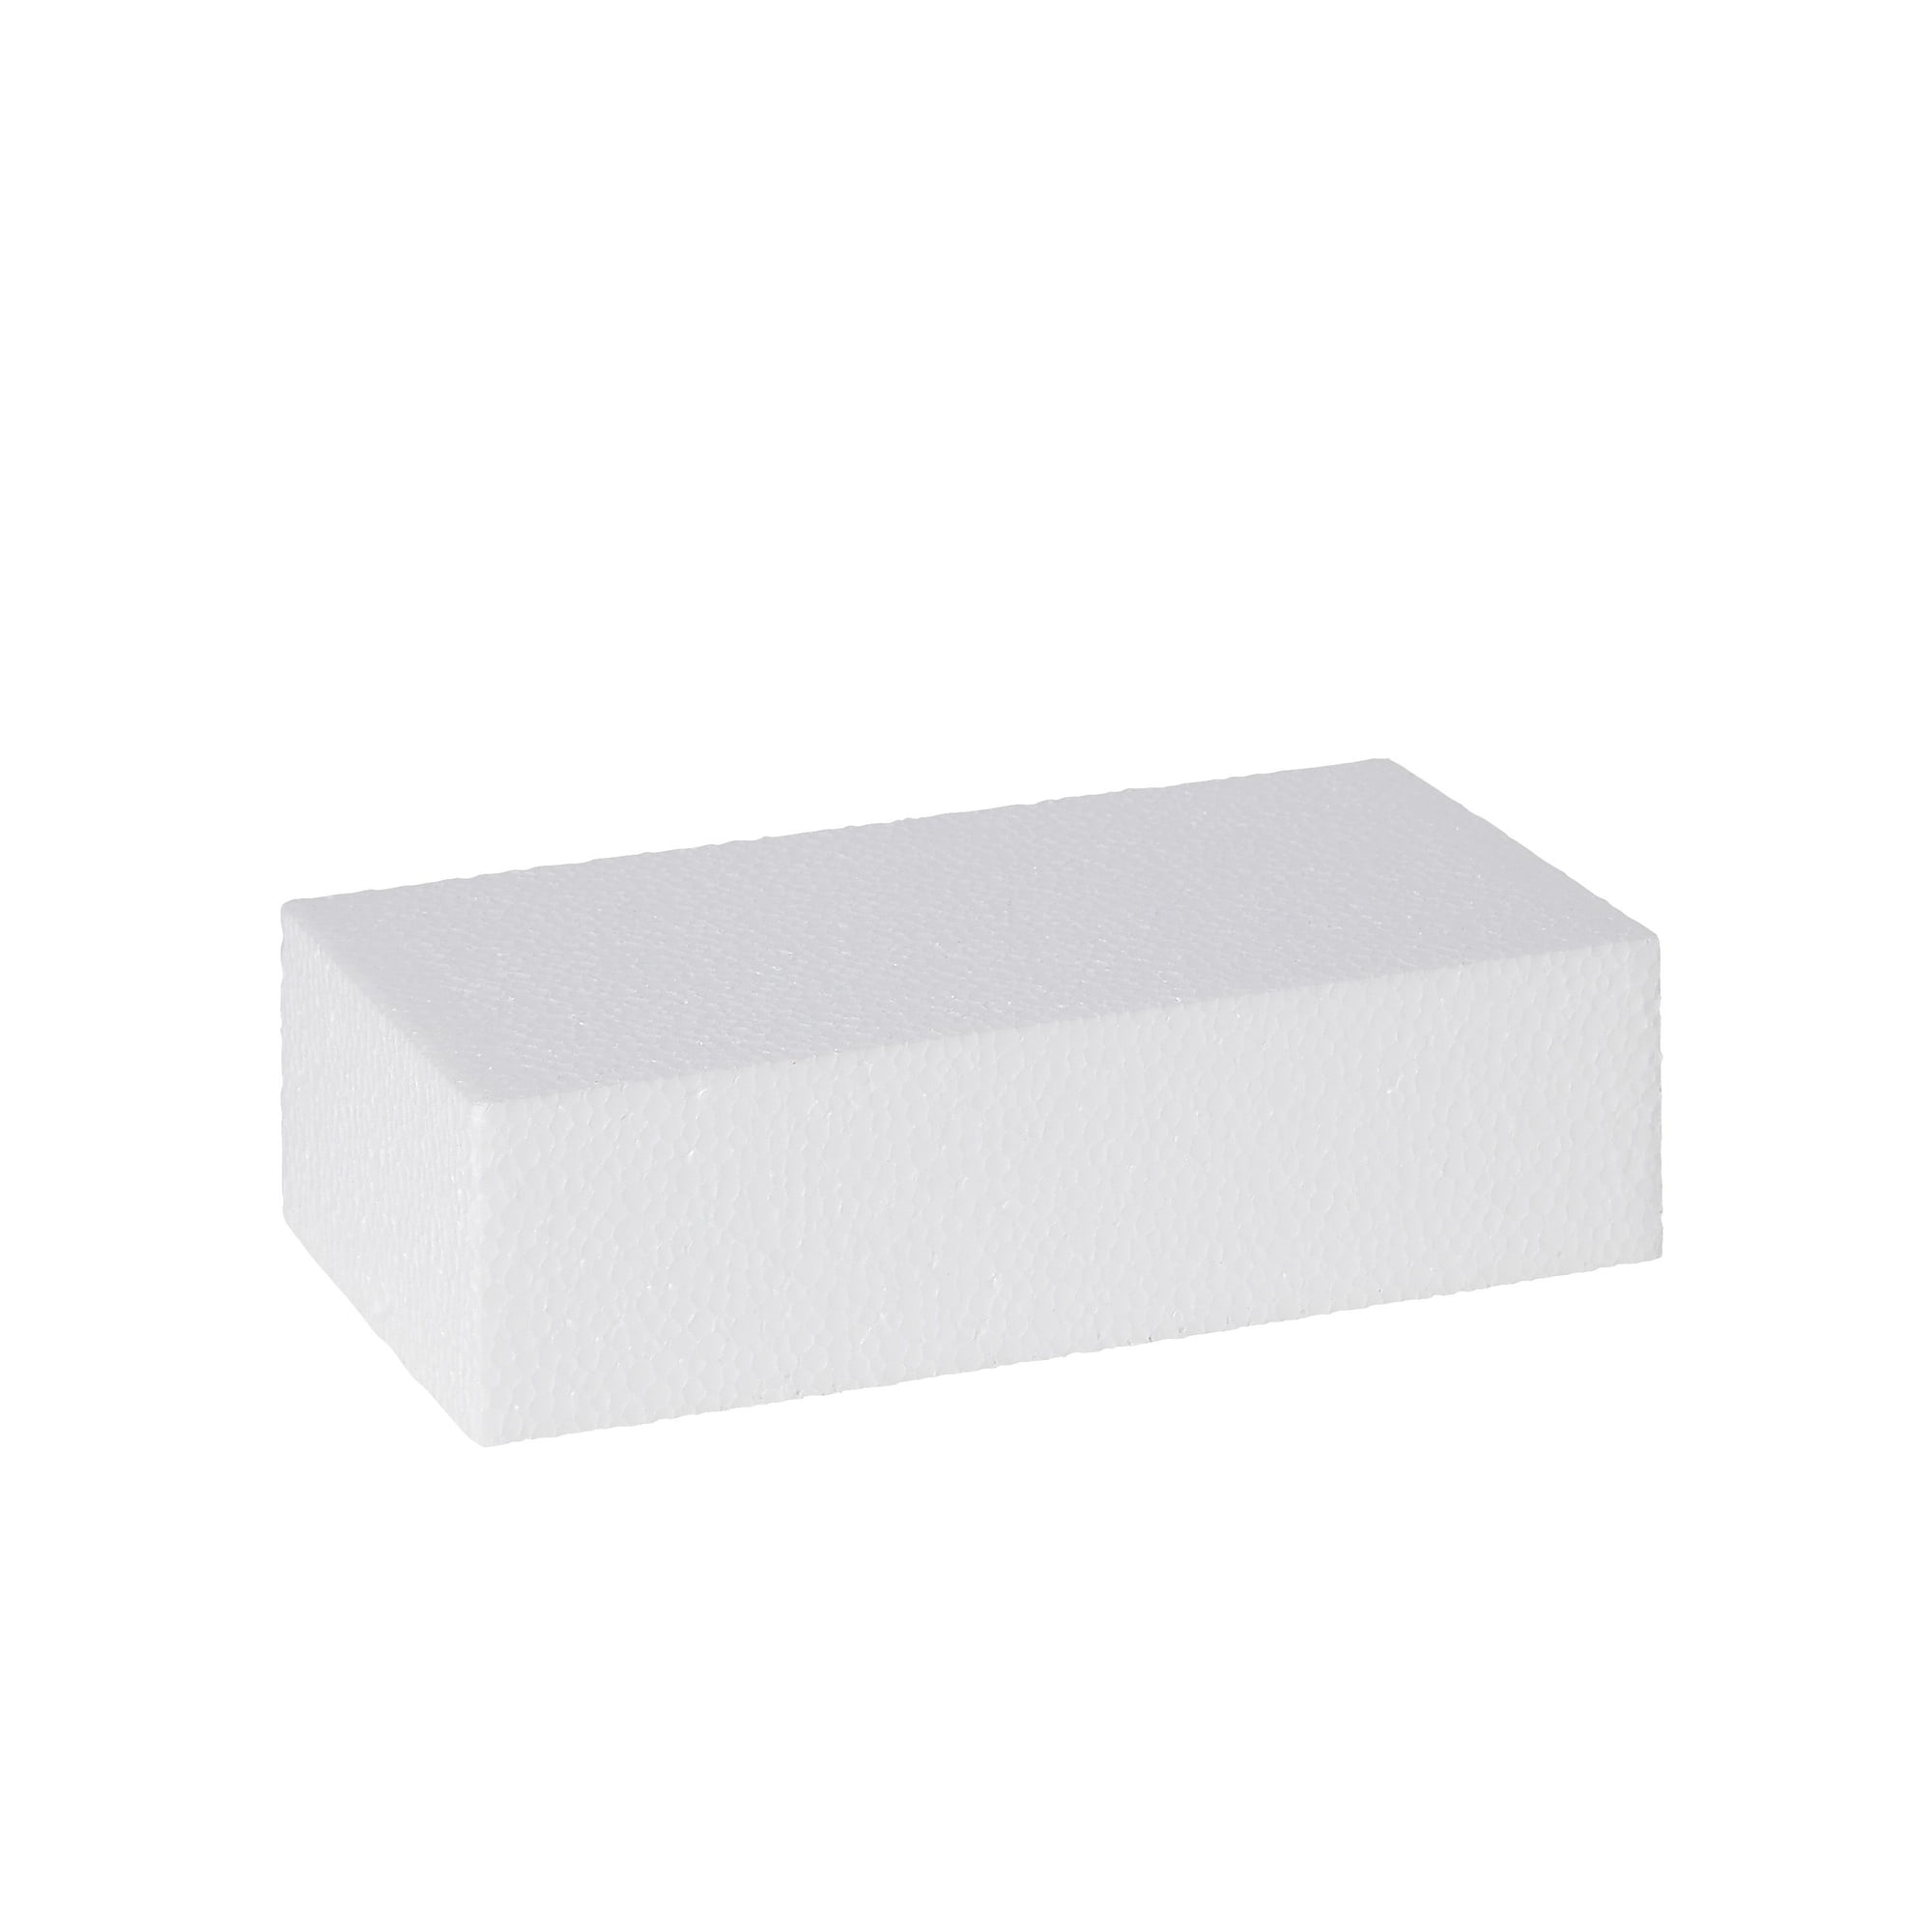 6 Pack Foam Blocks for Crafts - 12x4x2 Polystyrene Brick Rectangles for  Art Sculpting, Flower Arrangements, DIY, Packing